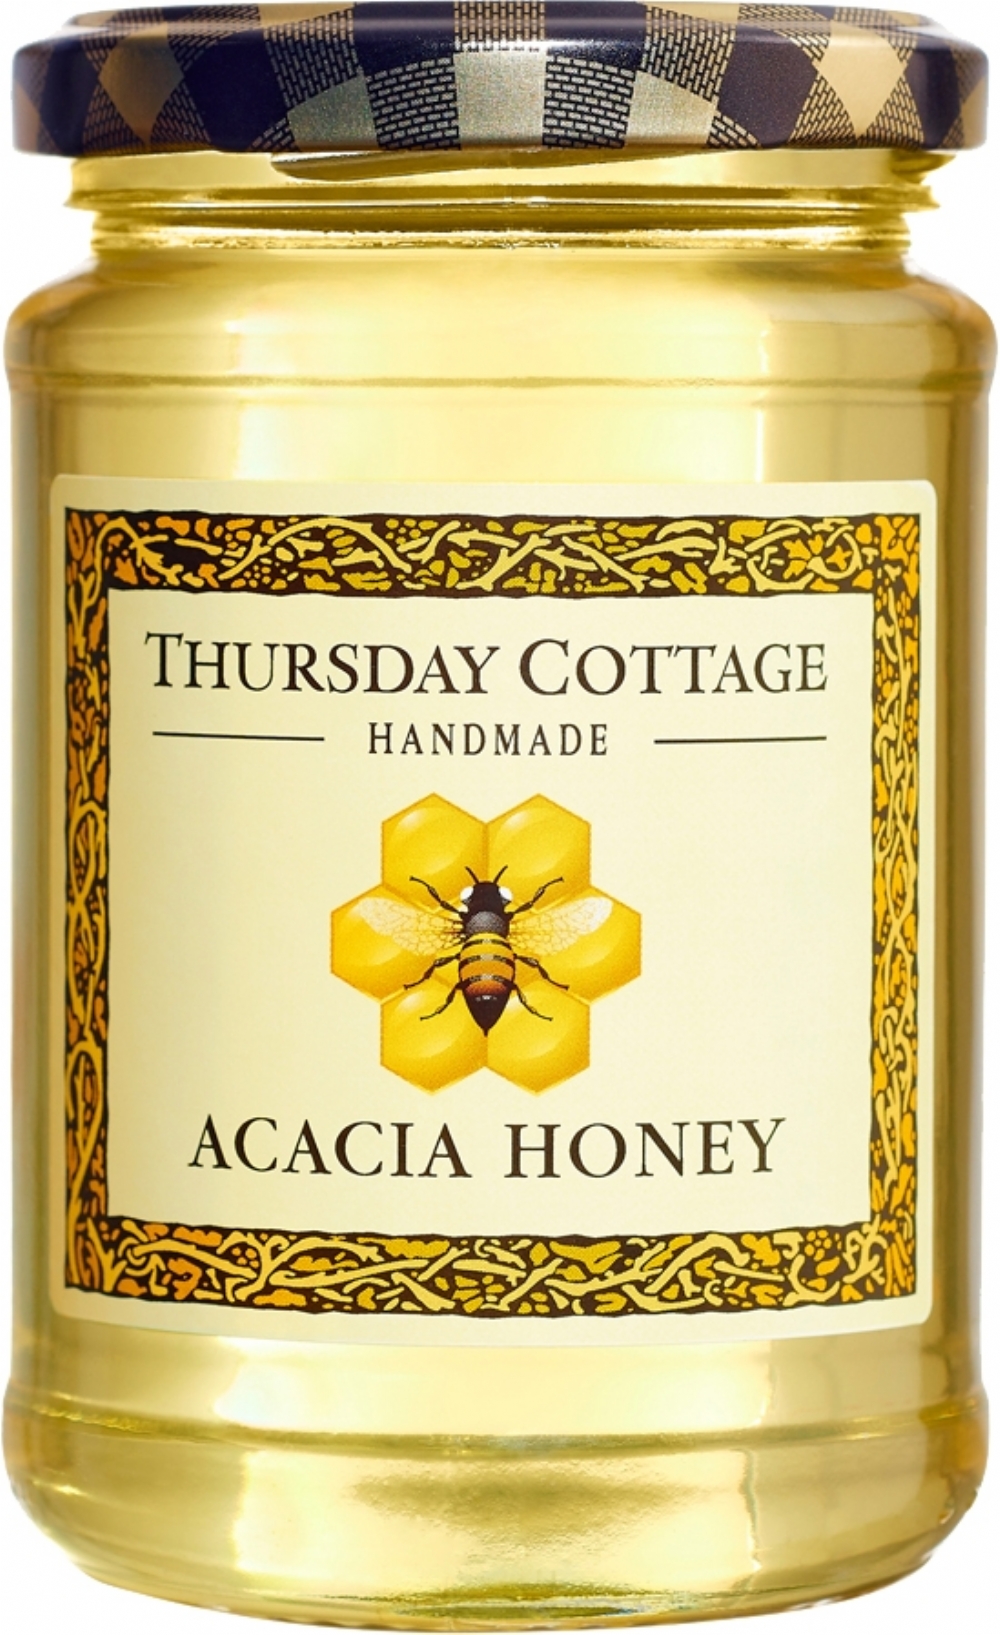 THURSDAY COTTAGE Acacia Honey 340g